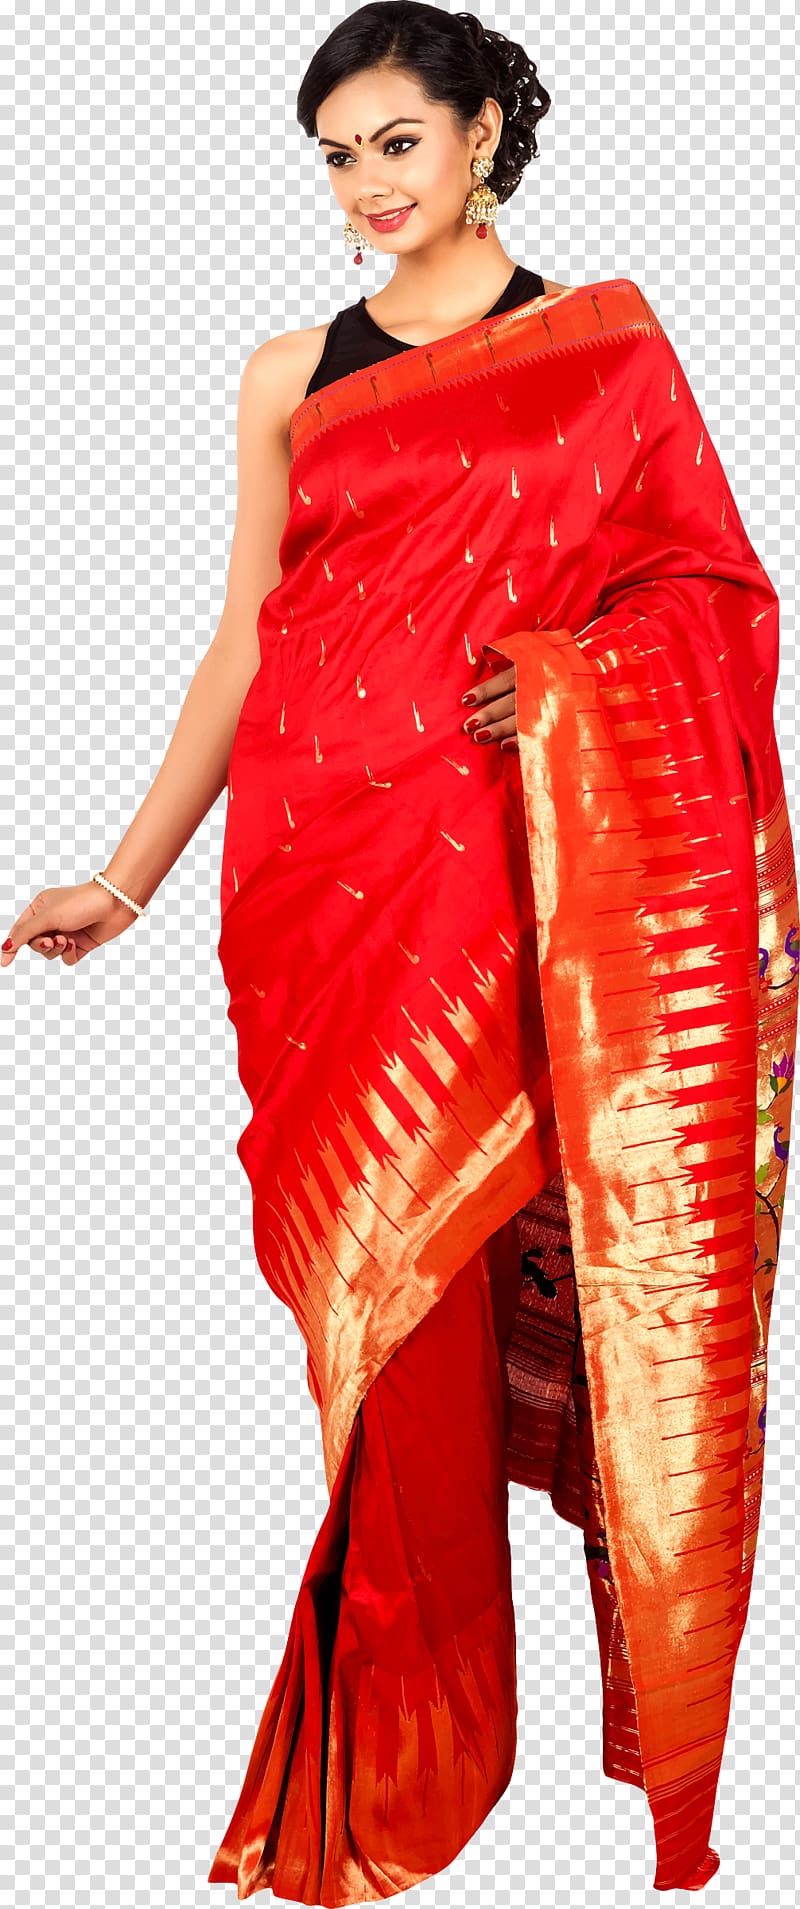 Clothing Sari Dress Online shopping Fashion, dress transparent background PNG clipart